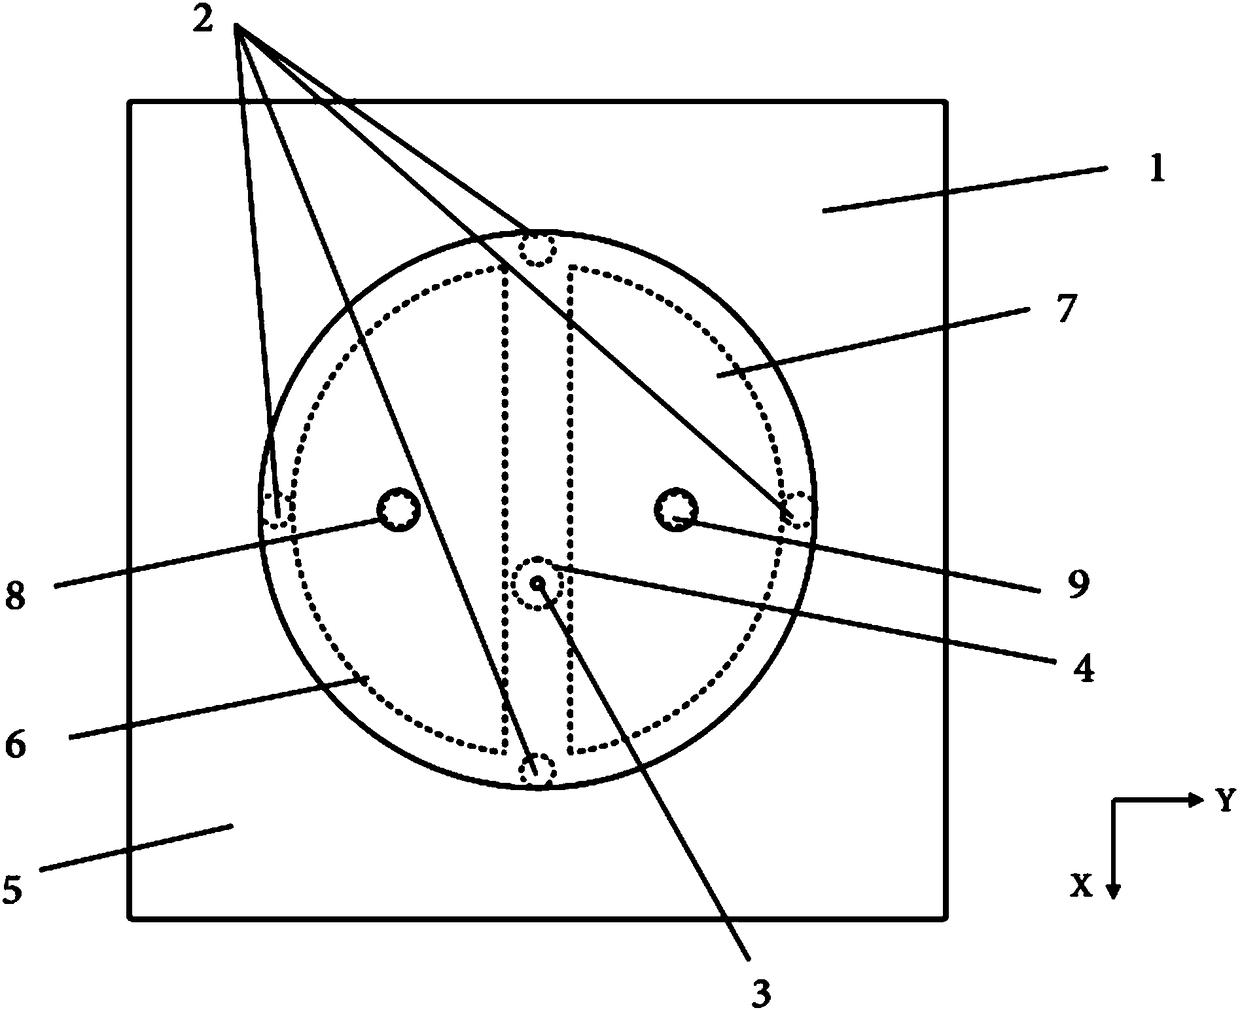 Water medium resonator antenna with polarization and directional diagram reconfigurability